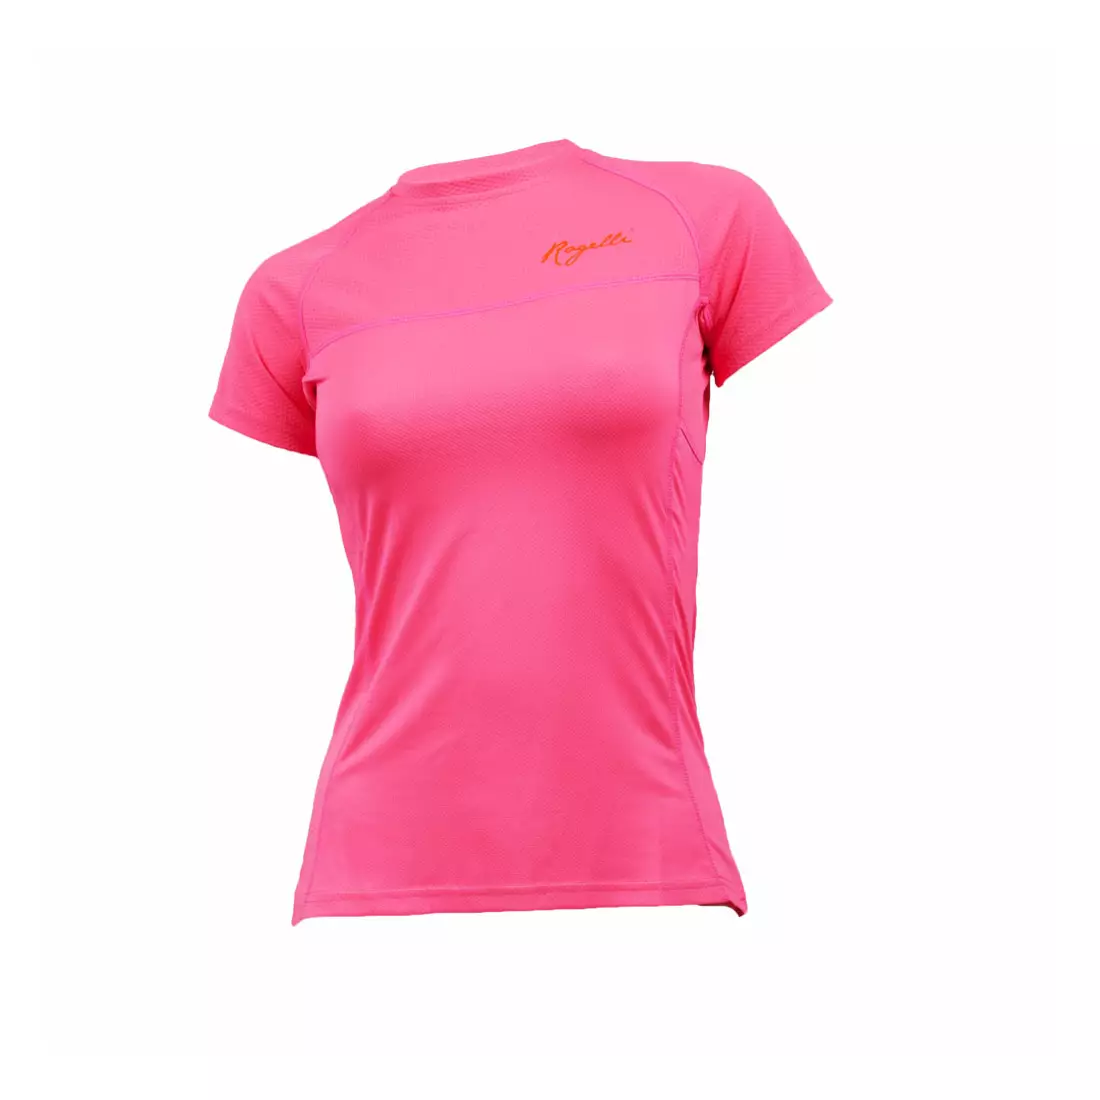 ROGELLI RUN SIRA - Damen-Lauf-T-Shirt - Farbe: Fluorrosa